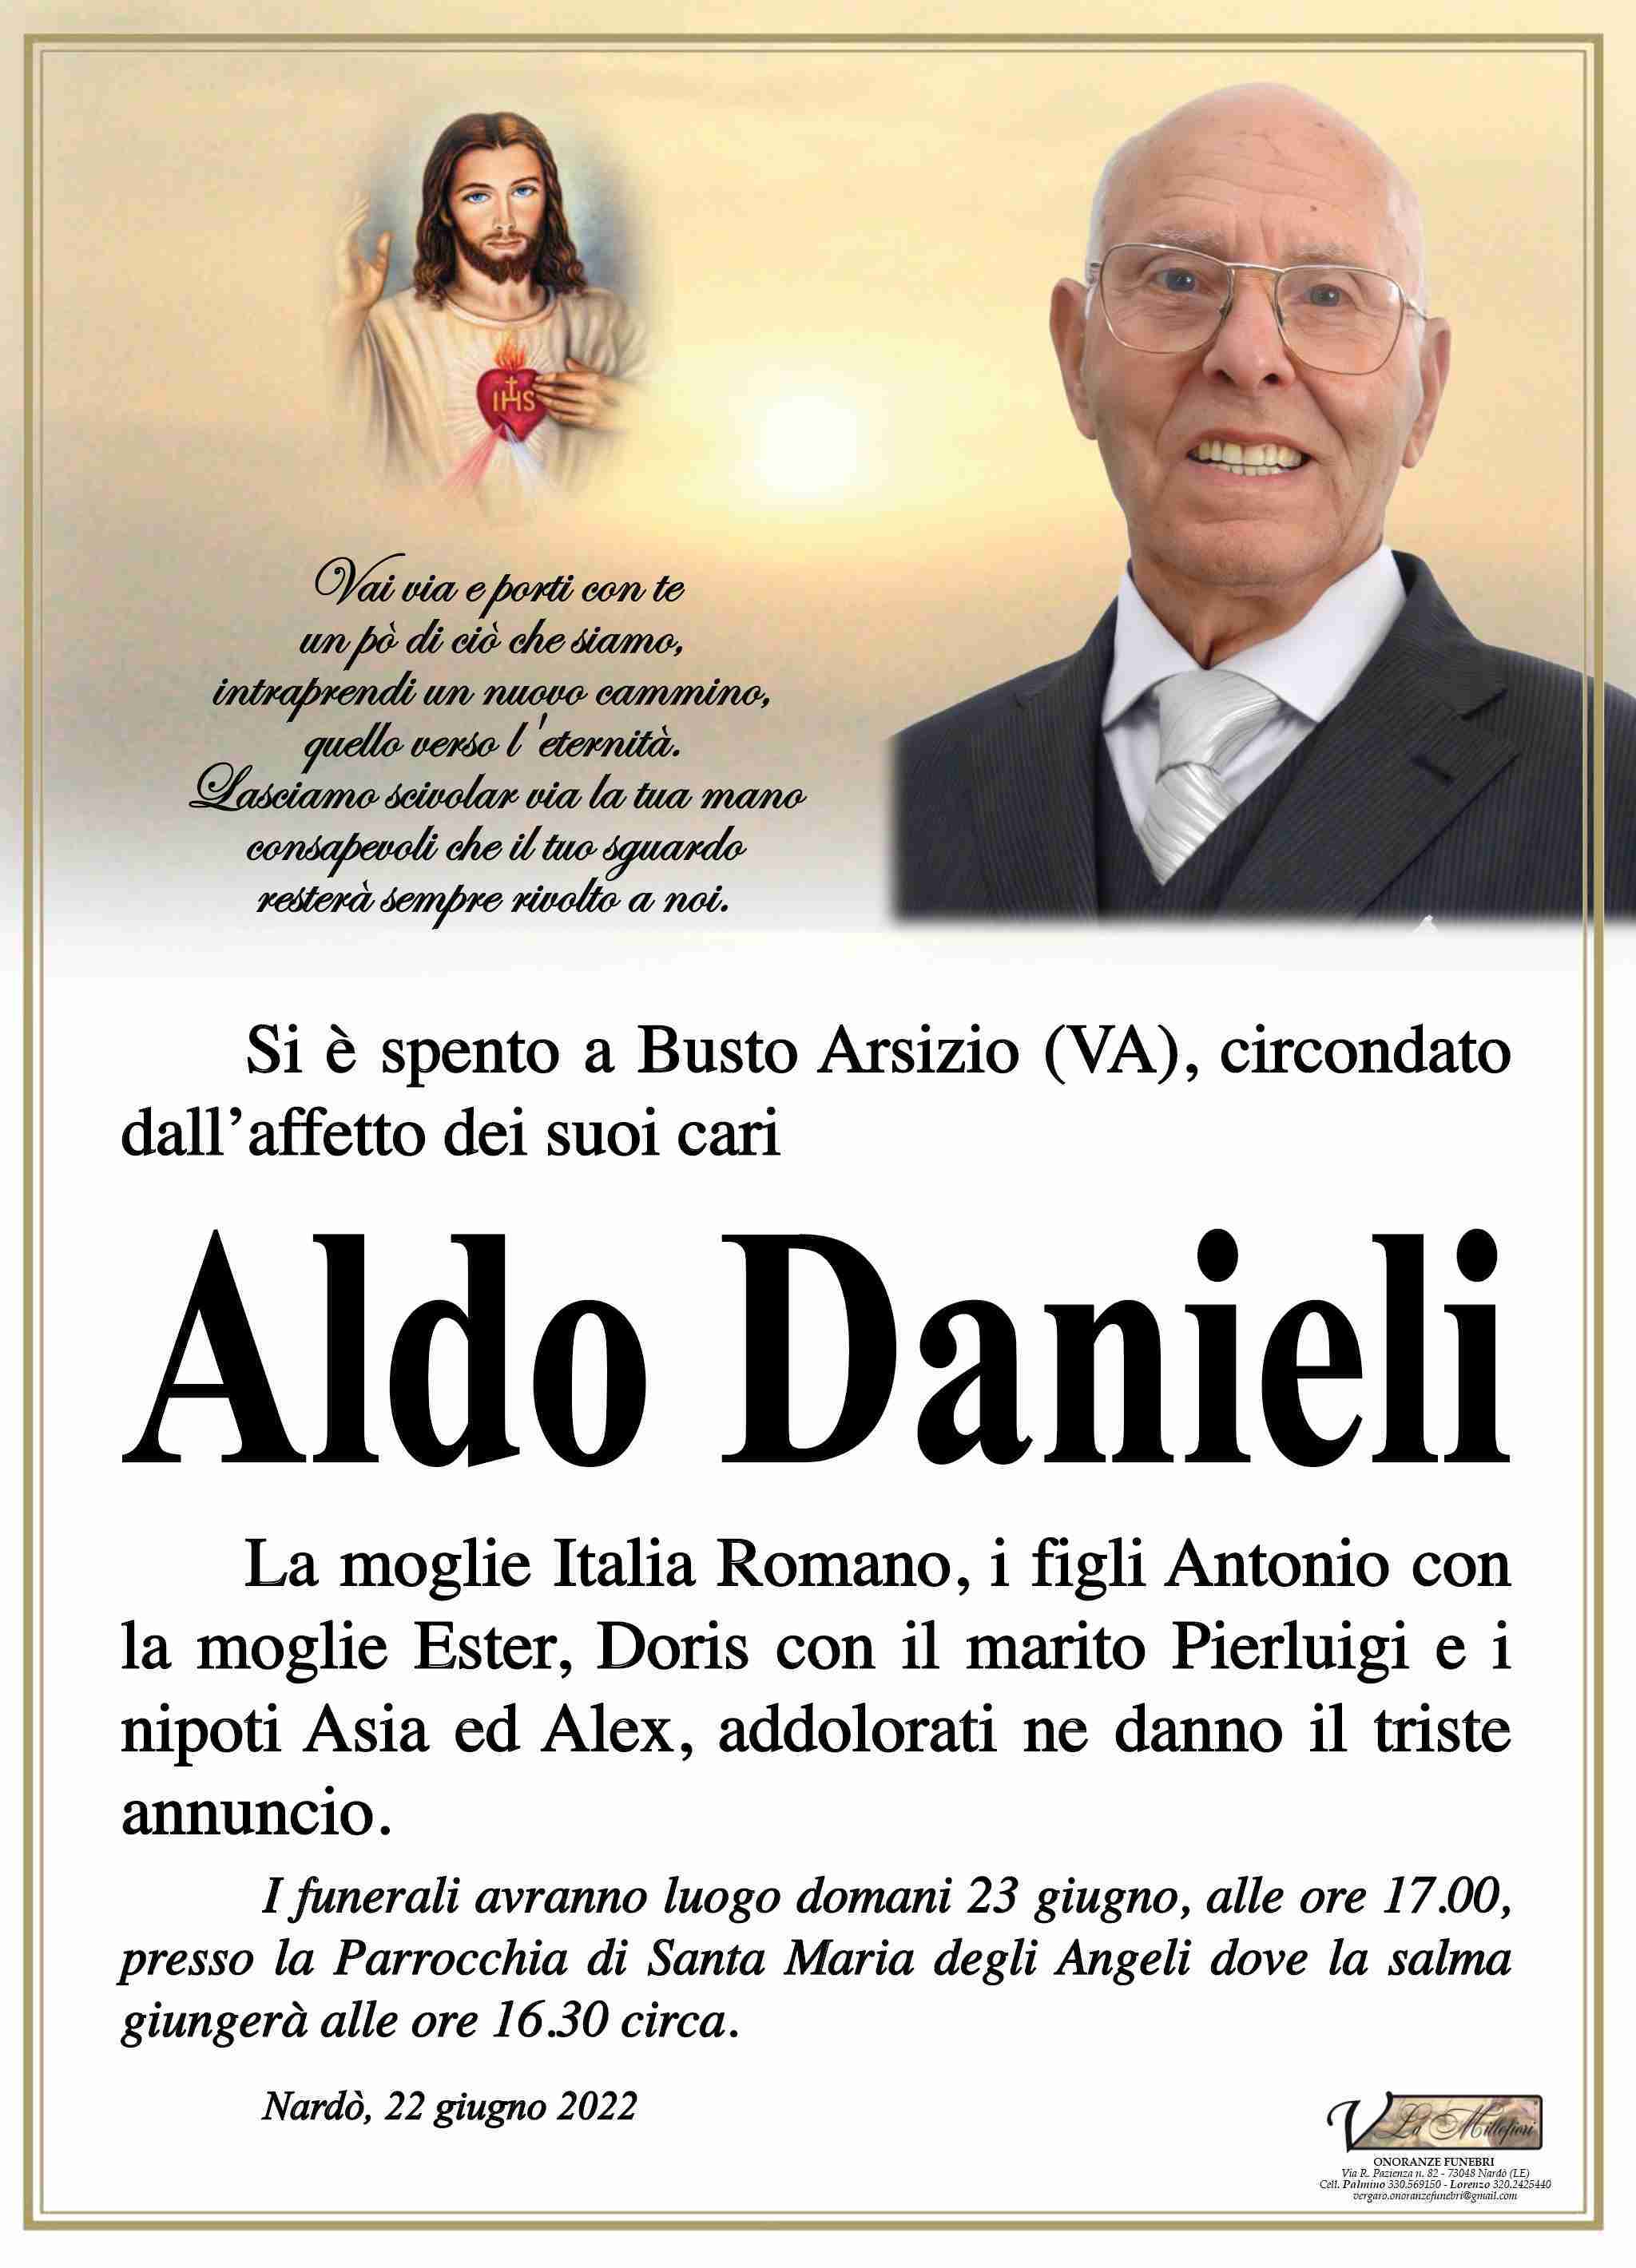 Aldo Danieli